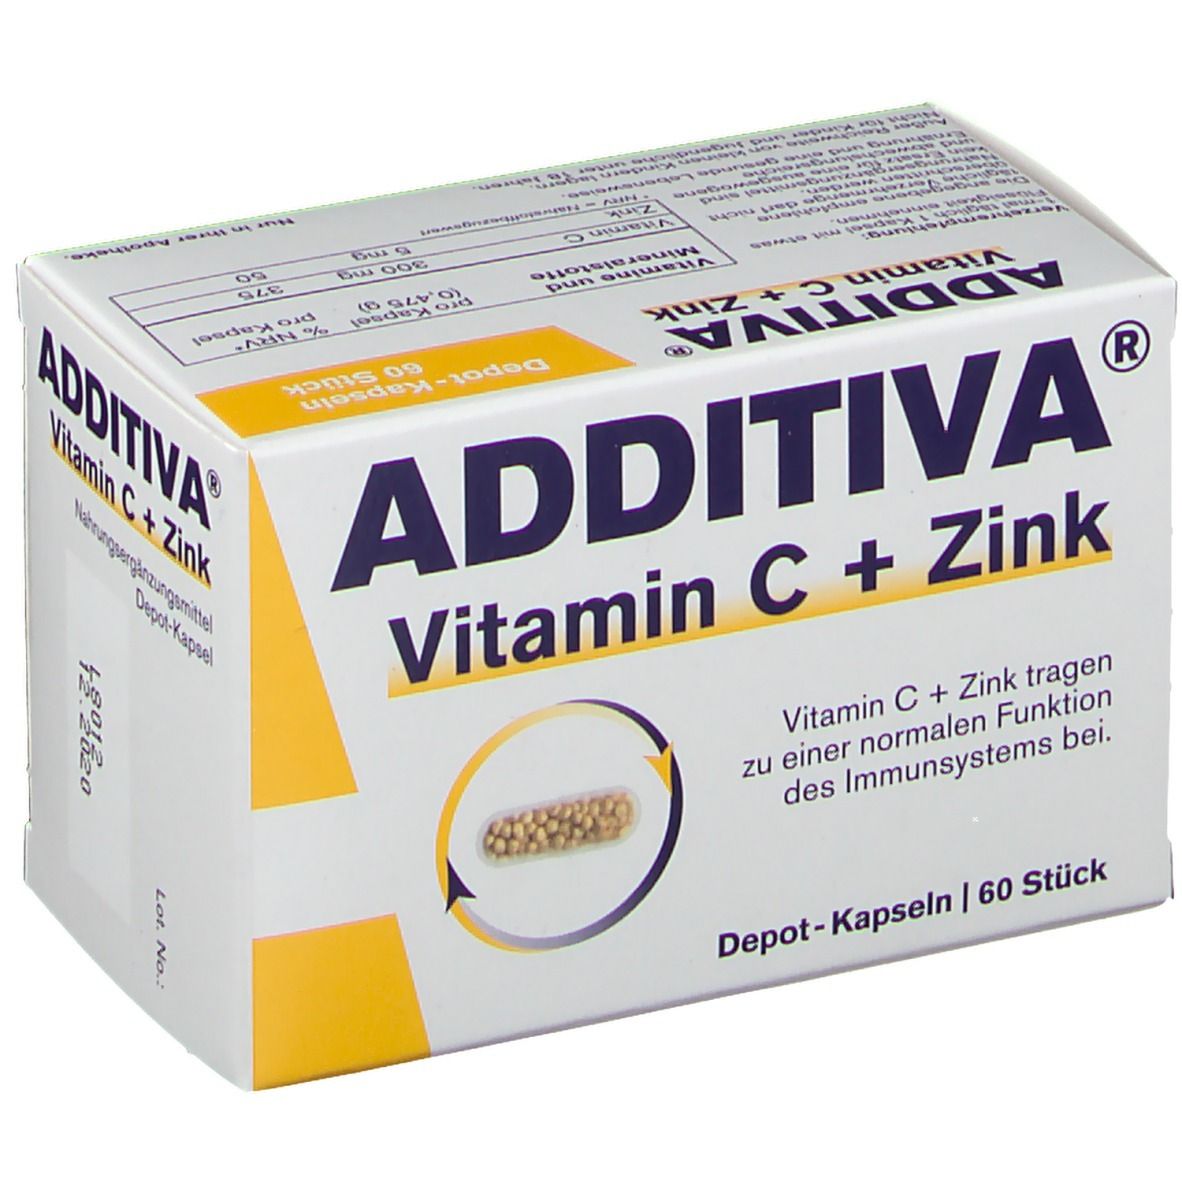 ADDITIVA® Vitamine C + Zinc Depot 300 mg capsules